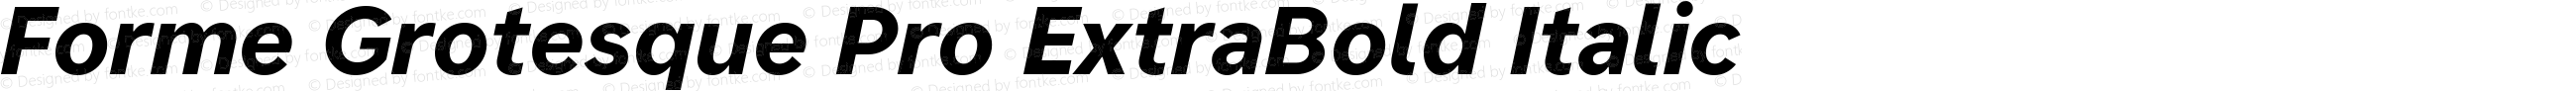 Forme Grotesque Pro ExtraBold Italic